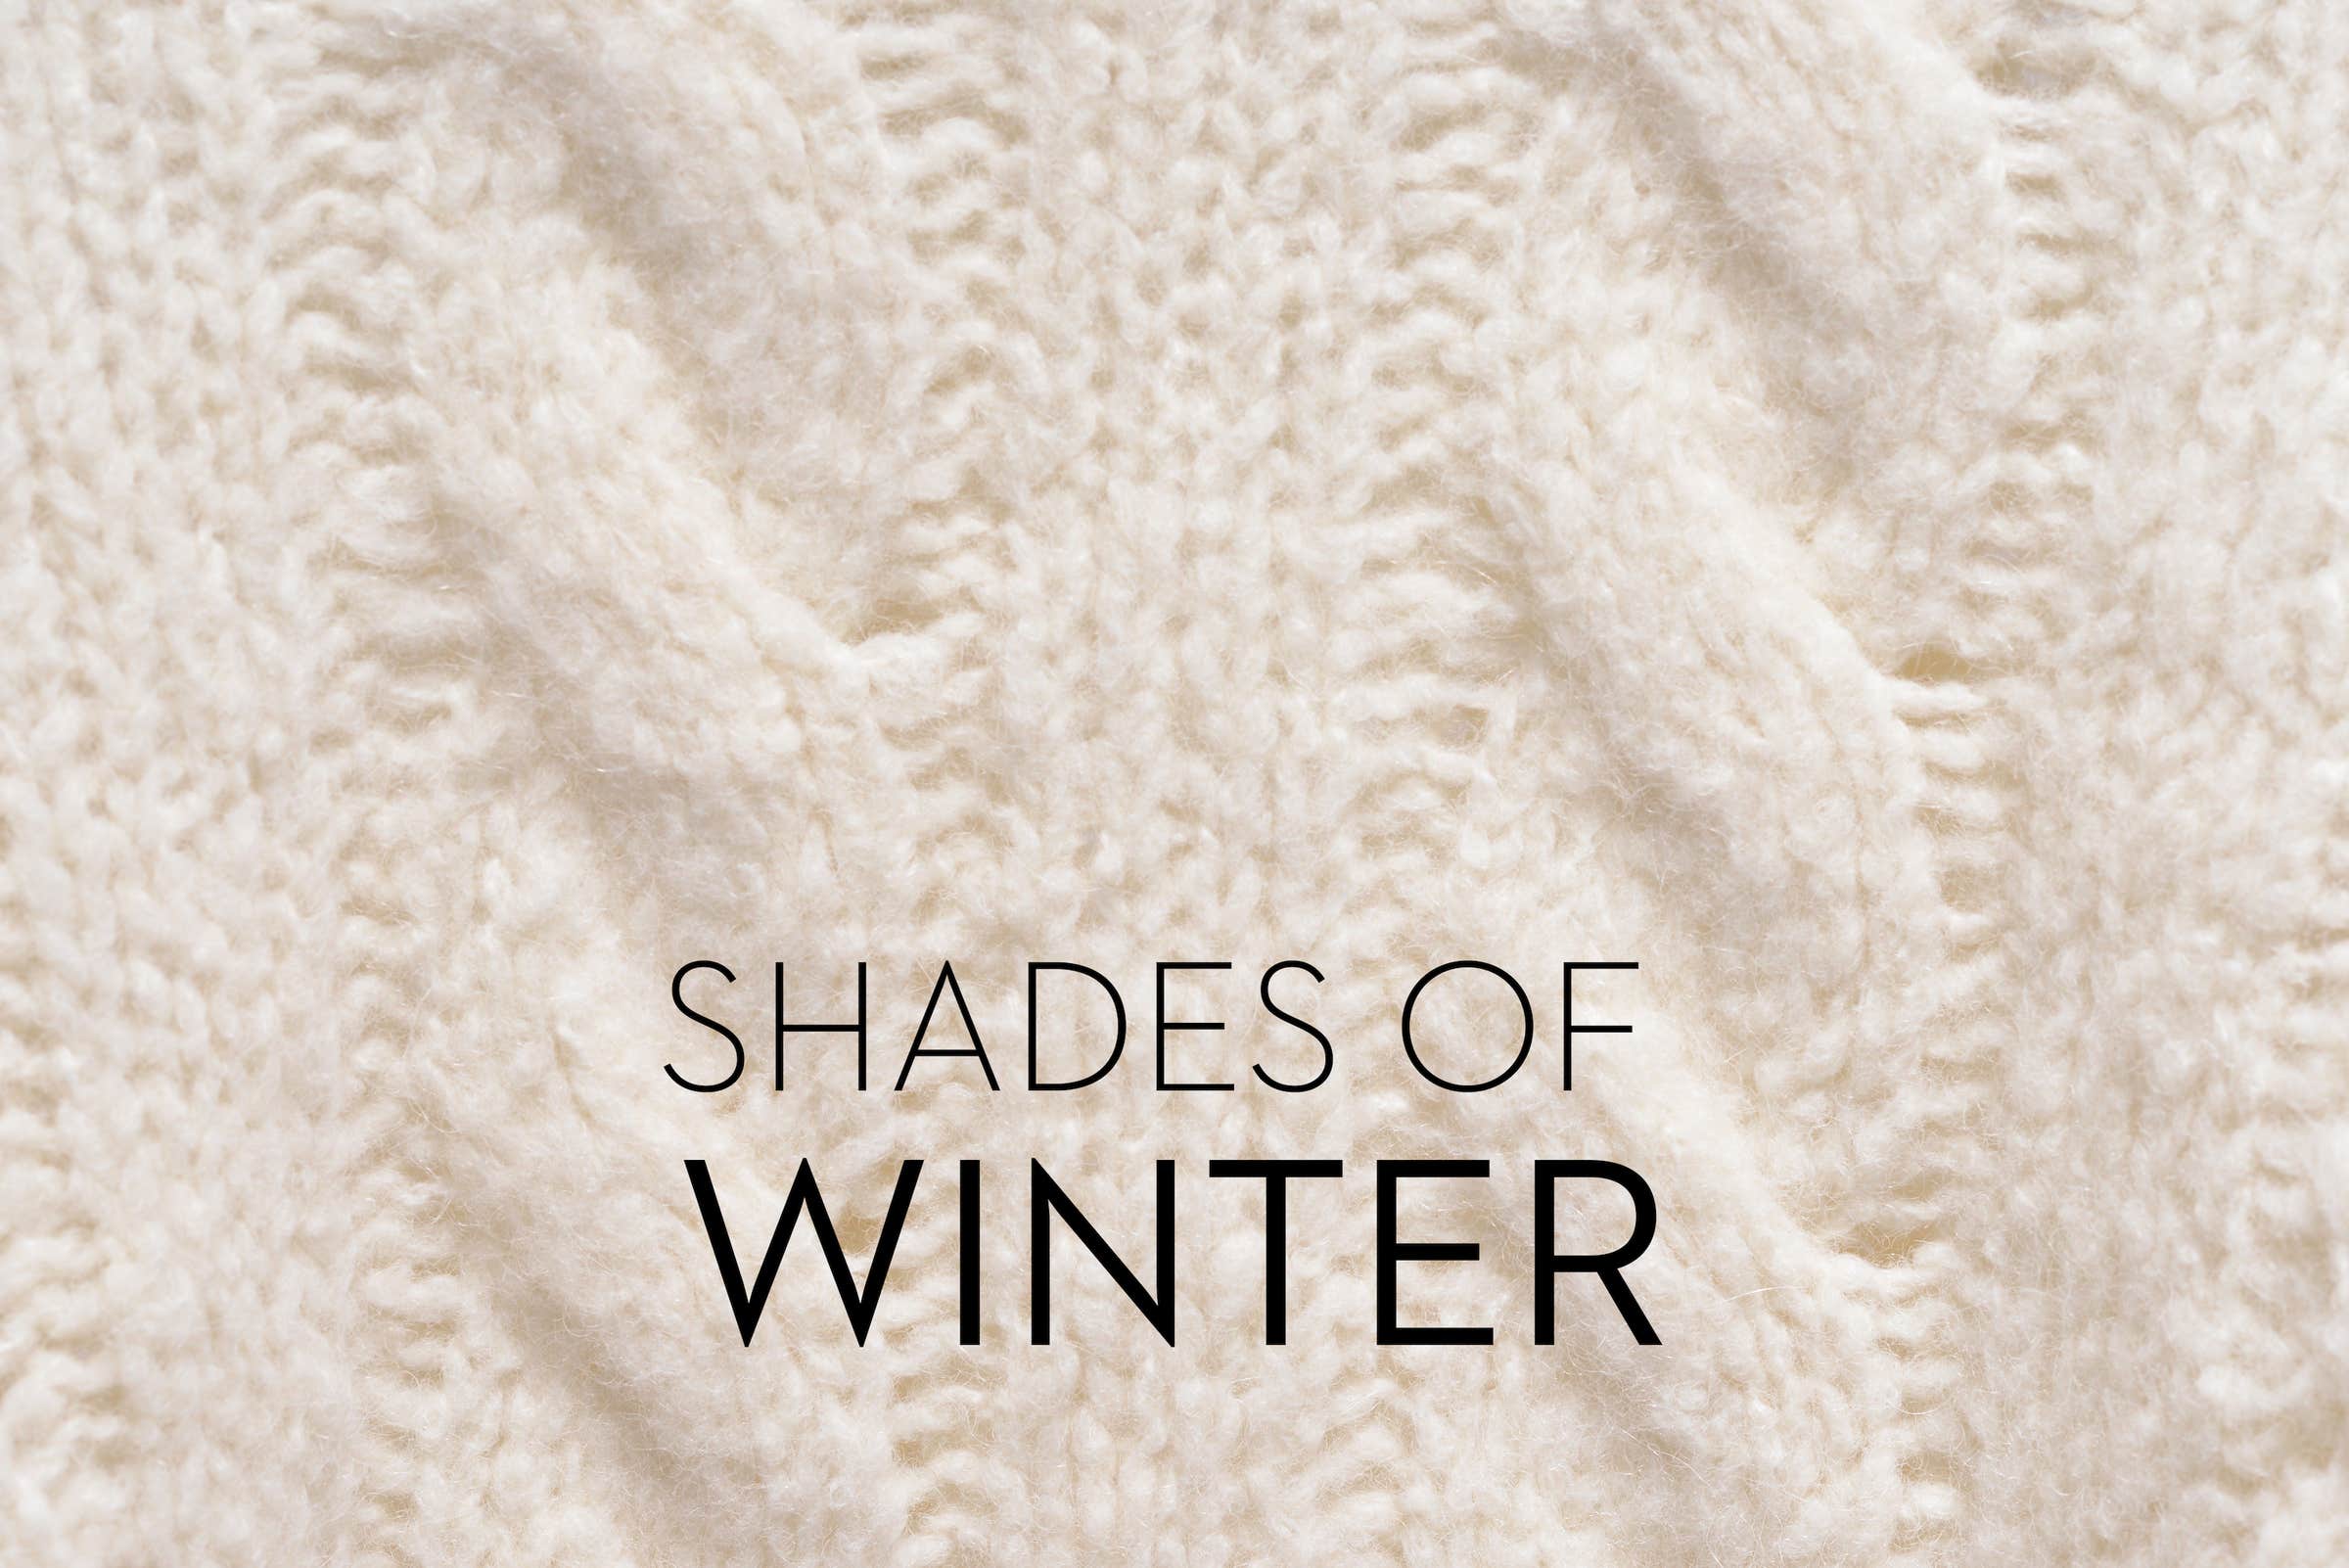 Shades of winter: Three ways to offset the season’s dark hues